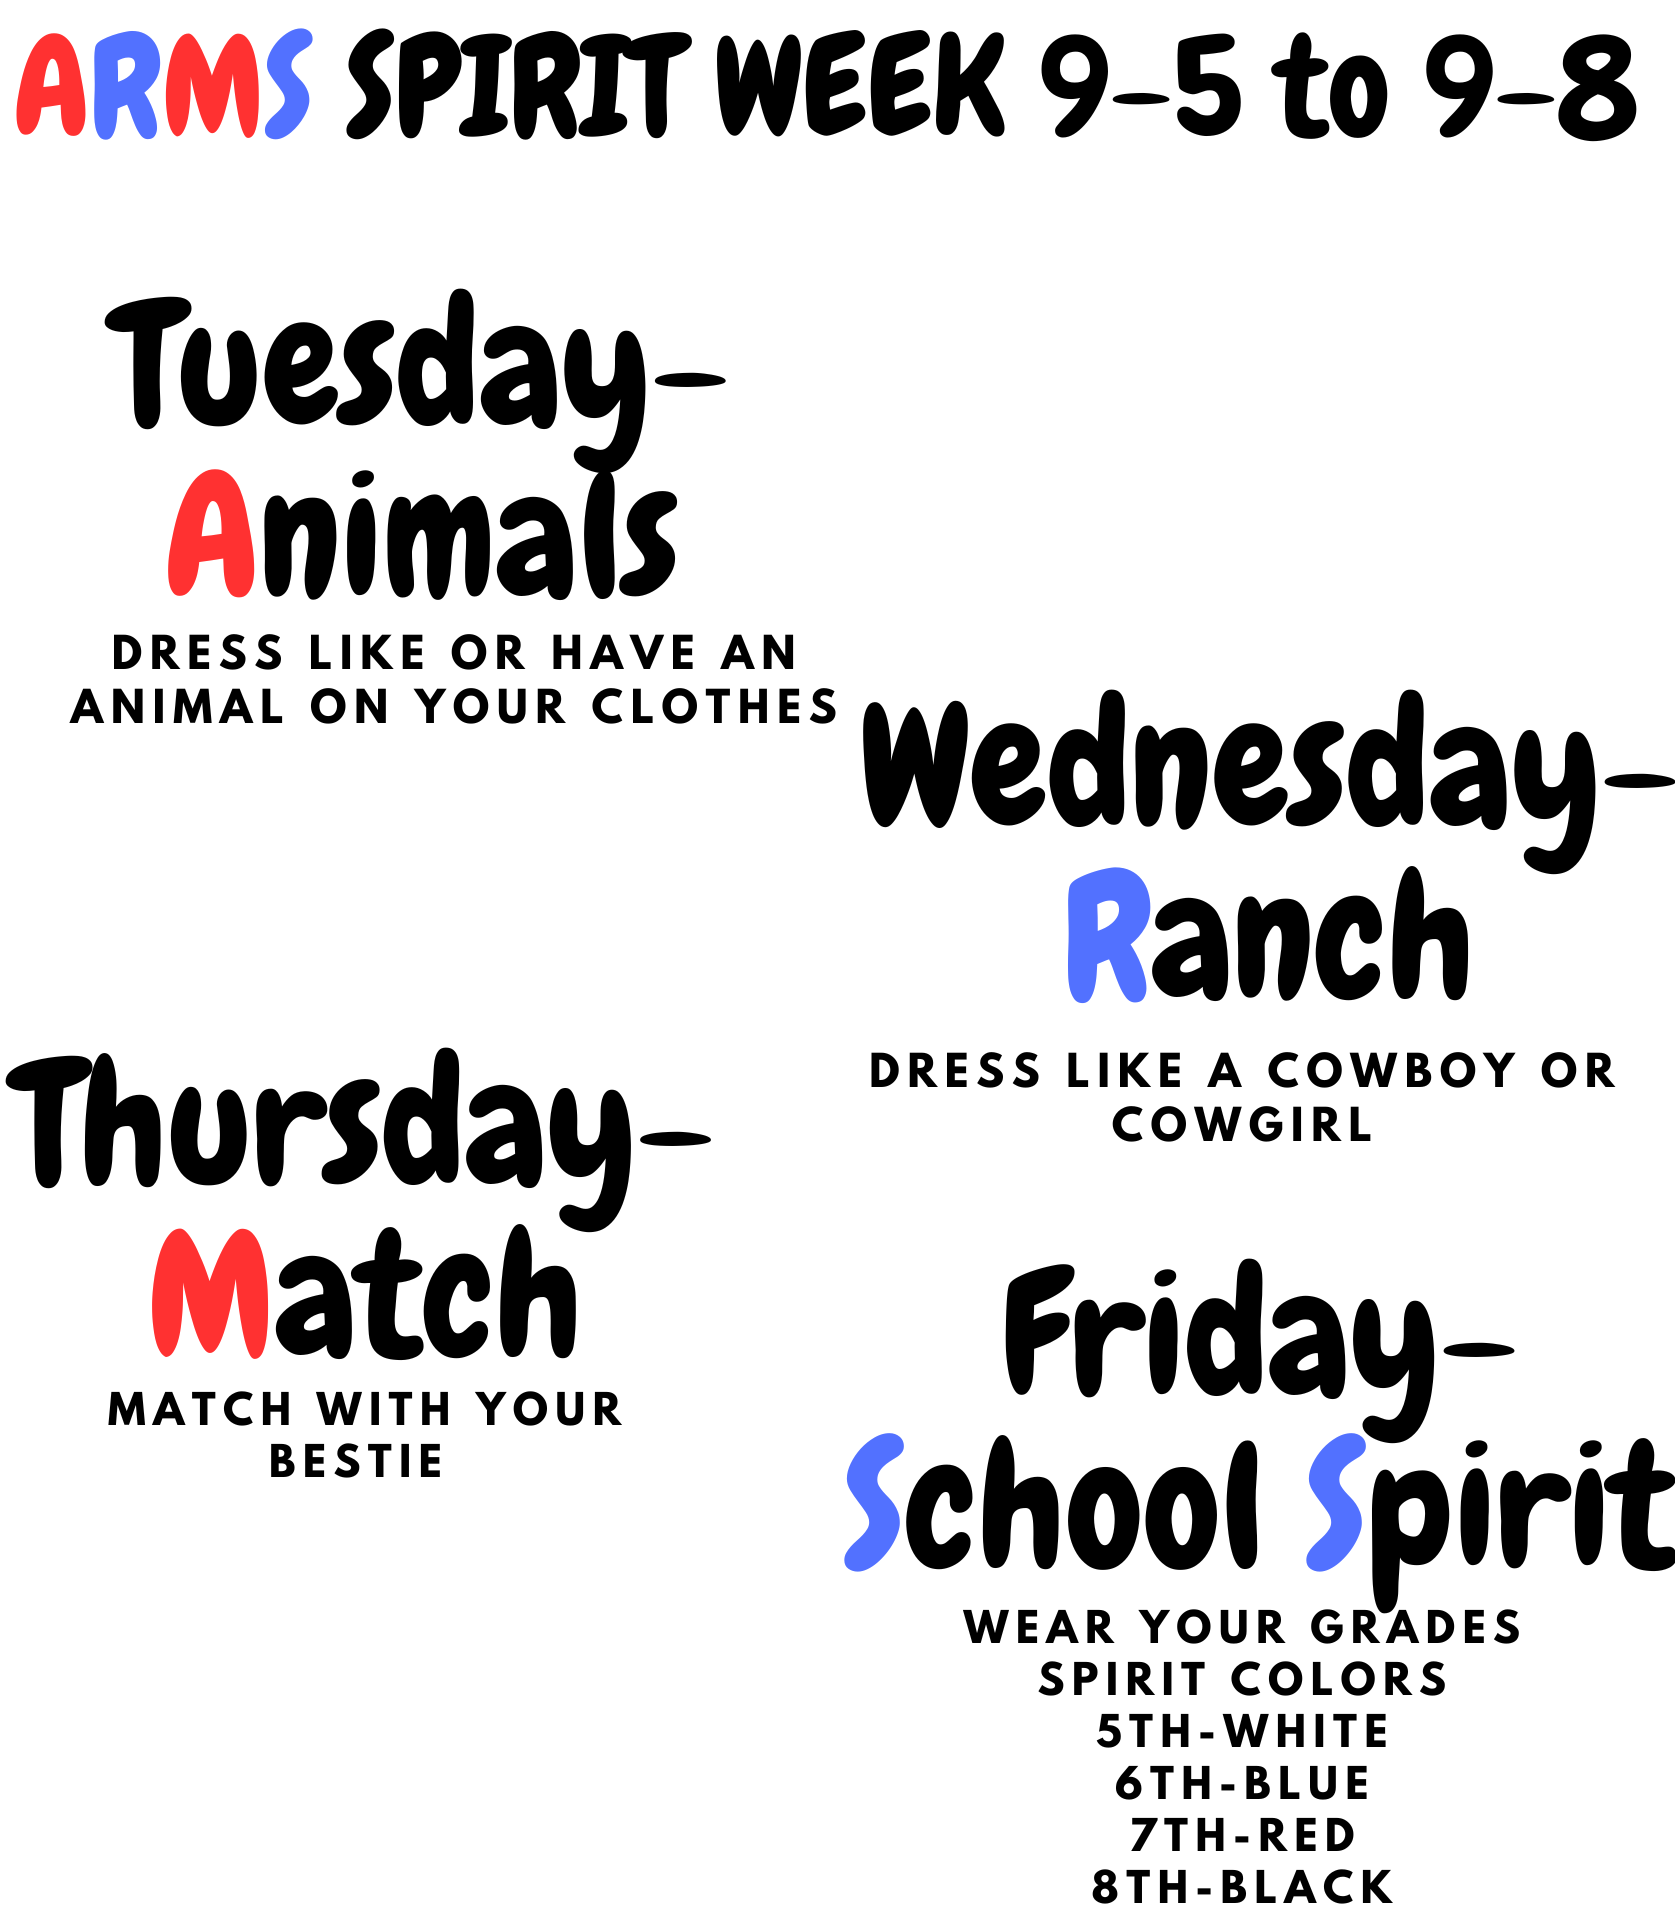 ARMS spirit week 9/5-9/8: Monday-Animals; Tuesday-Ranch; Wednesday-Match; Friday: Grade Spirit Colors